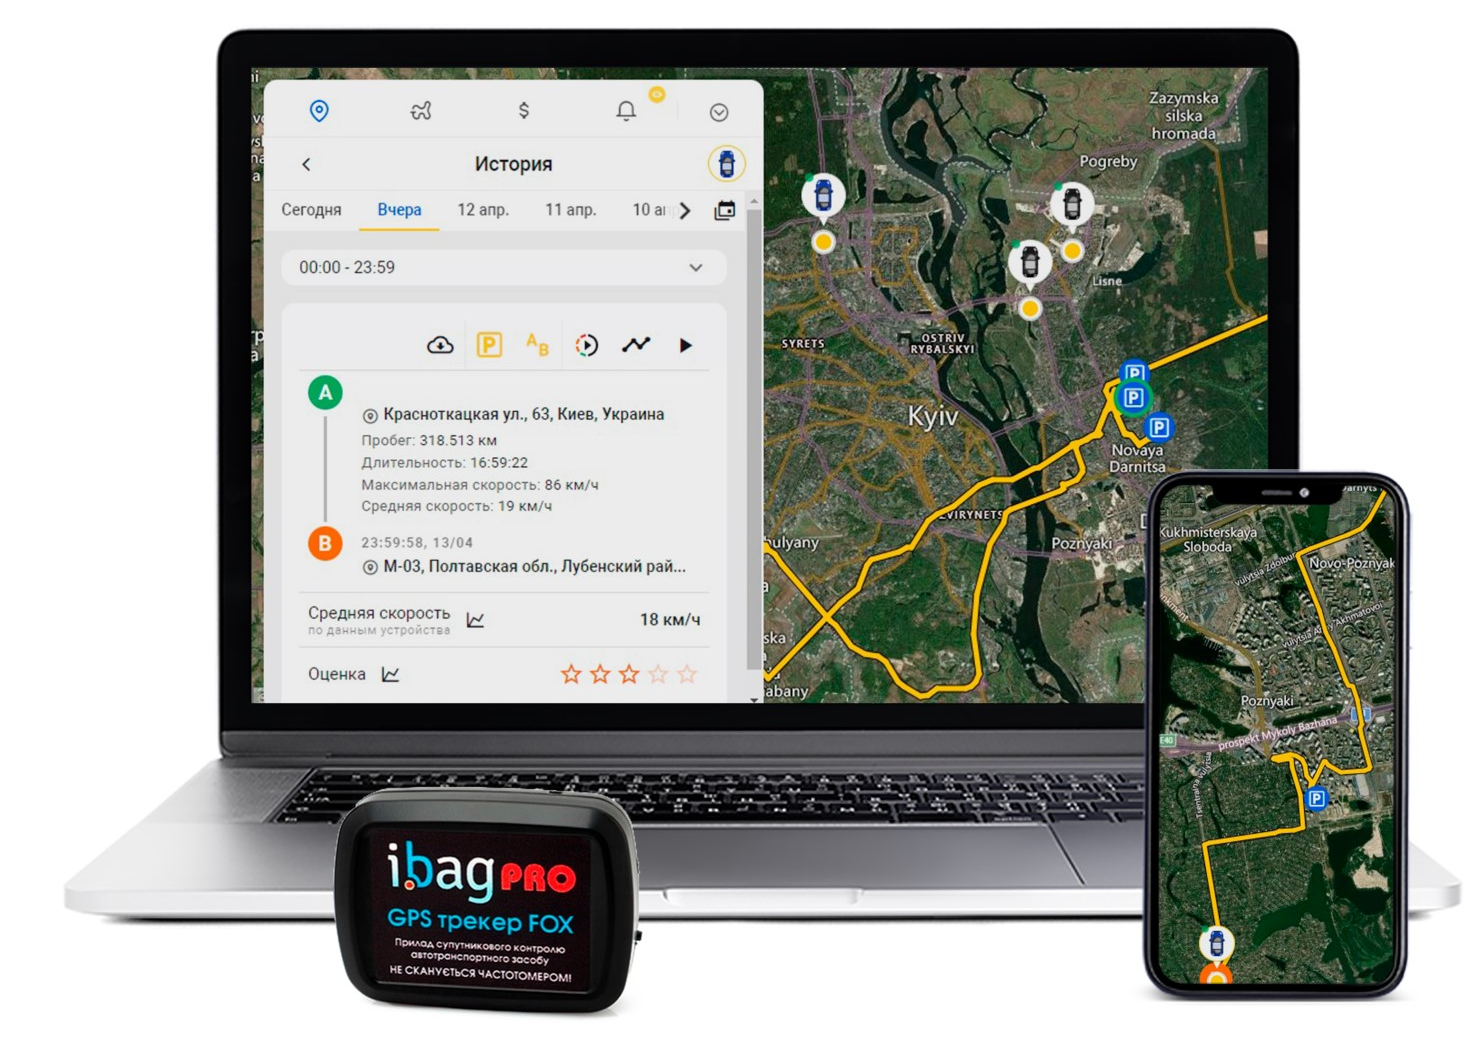 GPS-tracking app